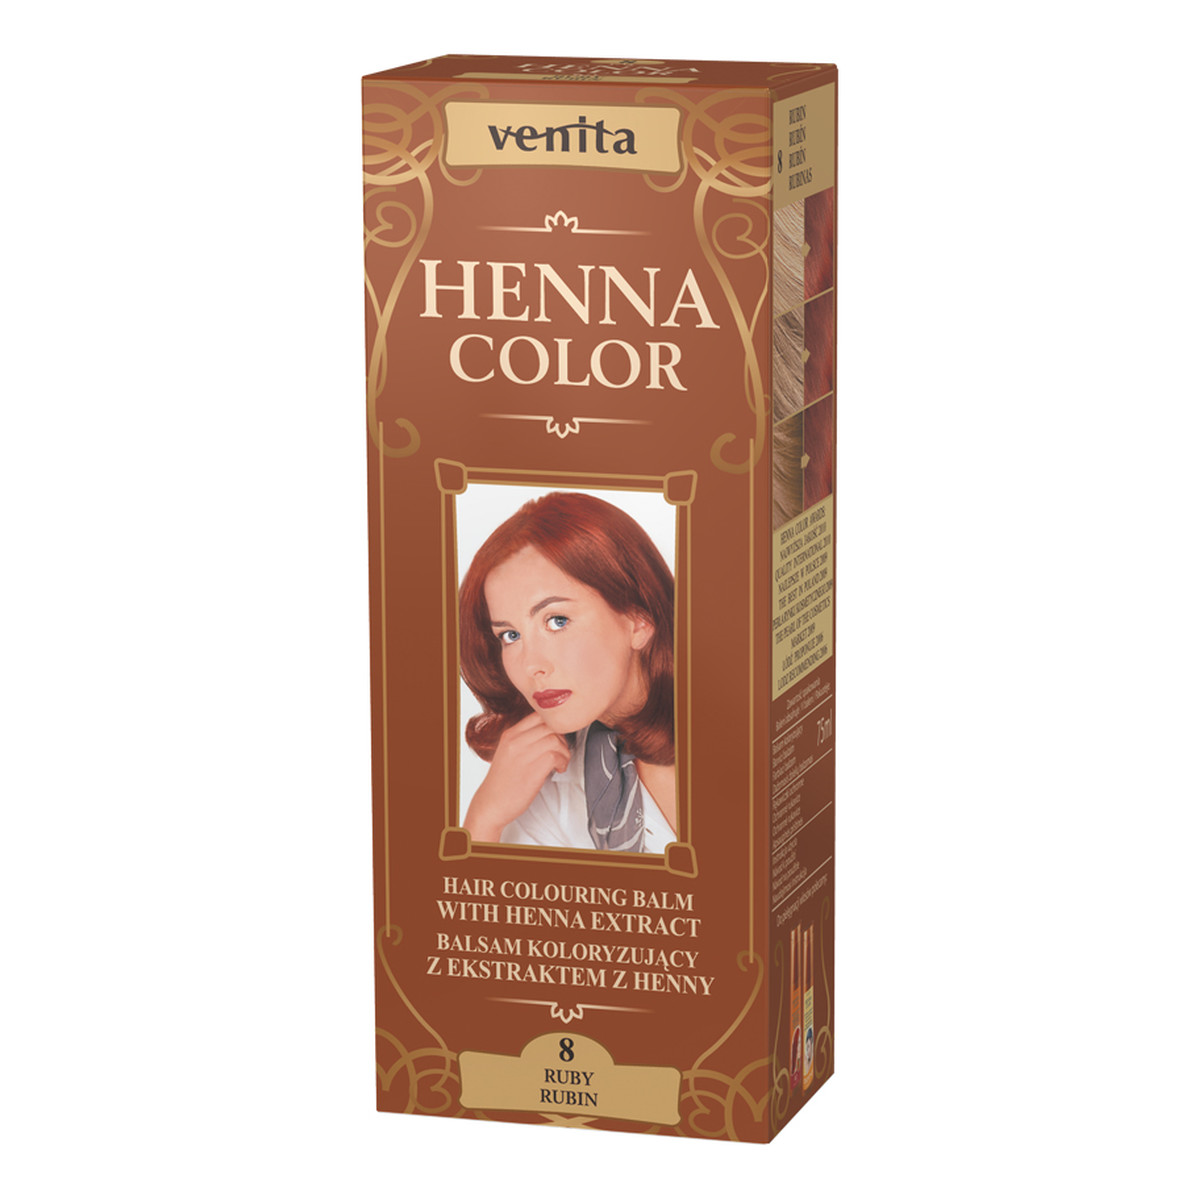 Venita HENNA COLOR Balsam koloryzujący z ekstraktem z henny TUBA 75ml